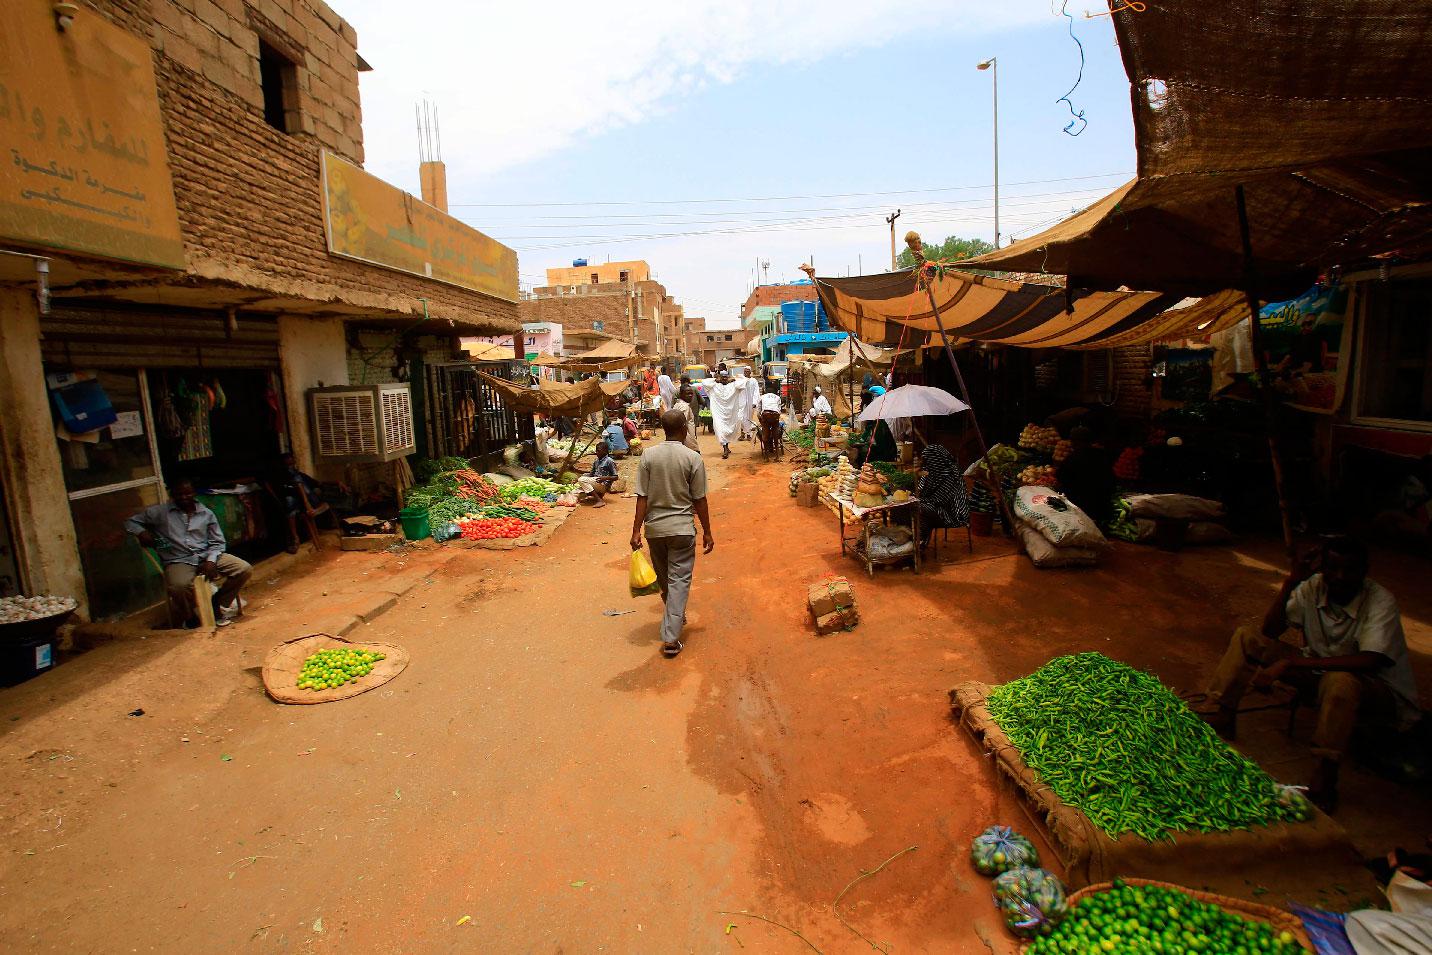 Sudanese residents walk in the central market of Khartoum